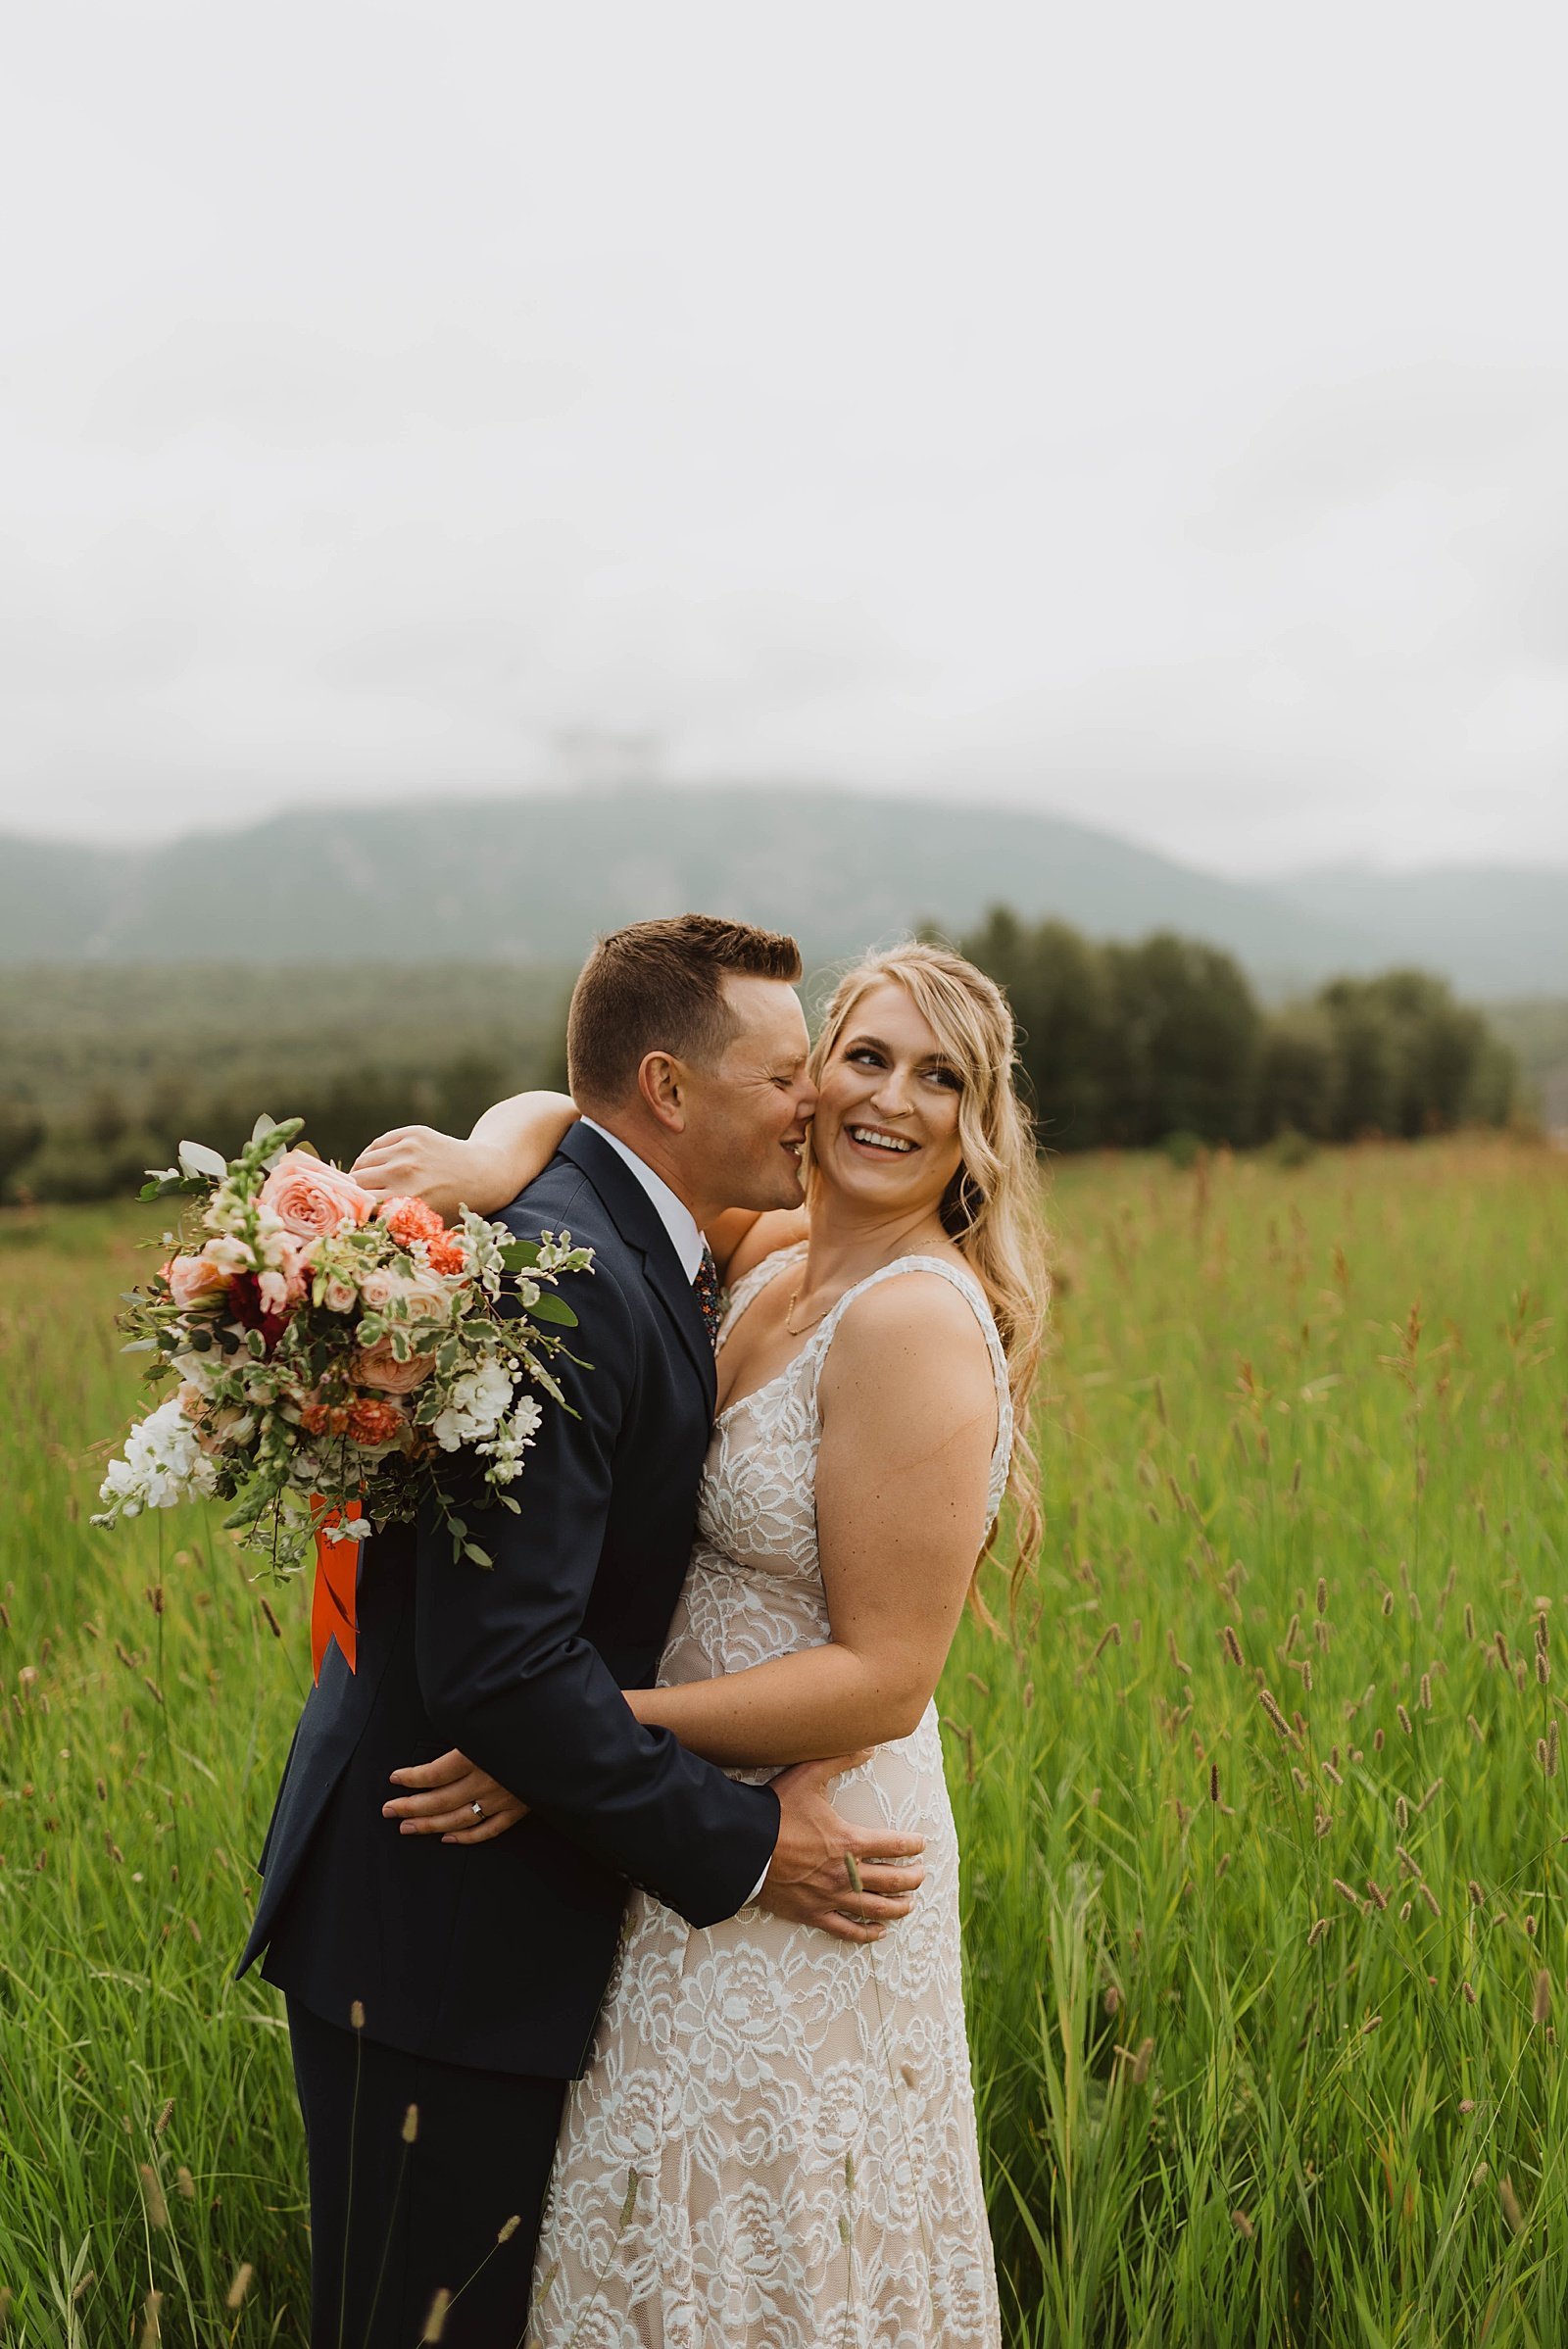  Groom kissing bride’s cheek in a field by Alaska wedding photographer, Theresa McDonald.  